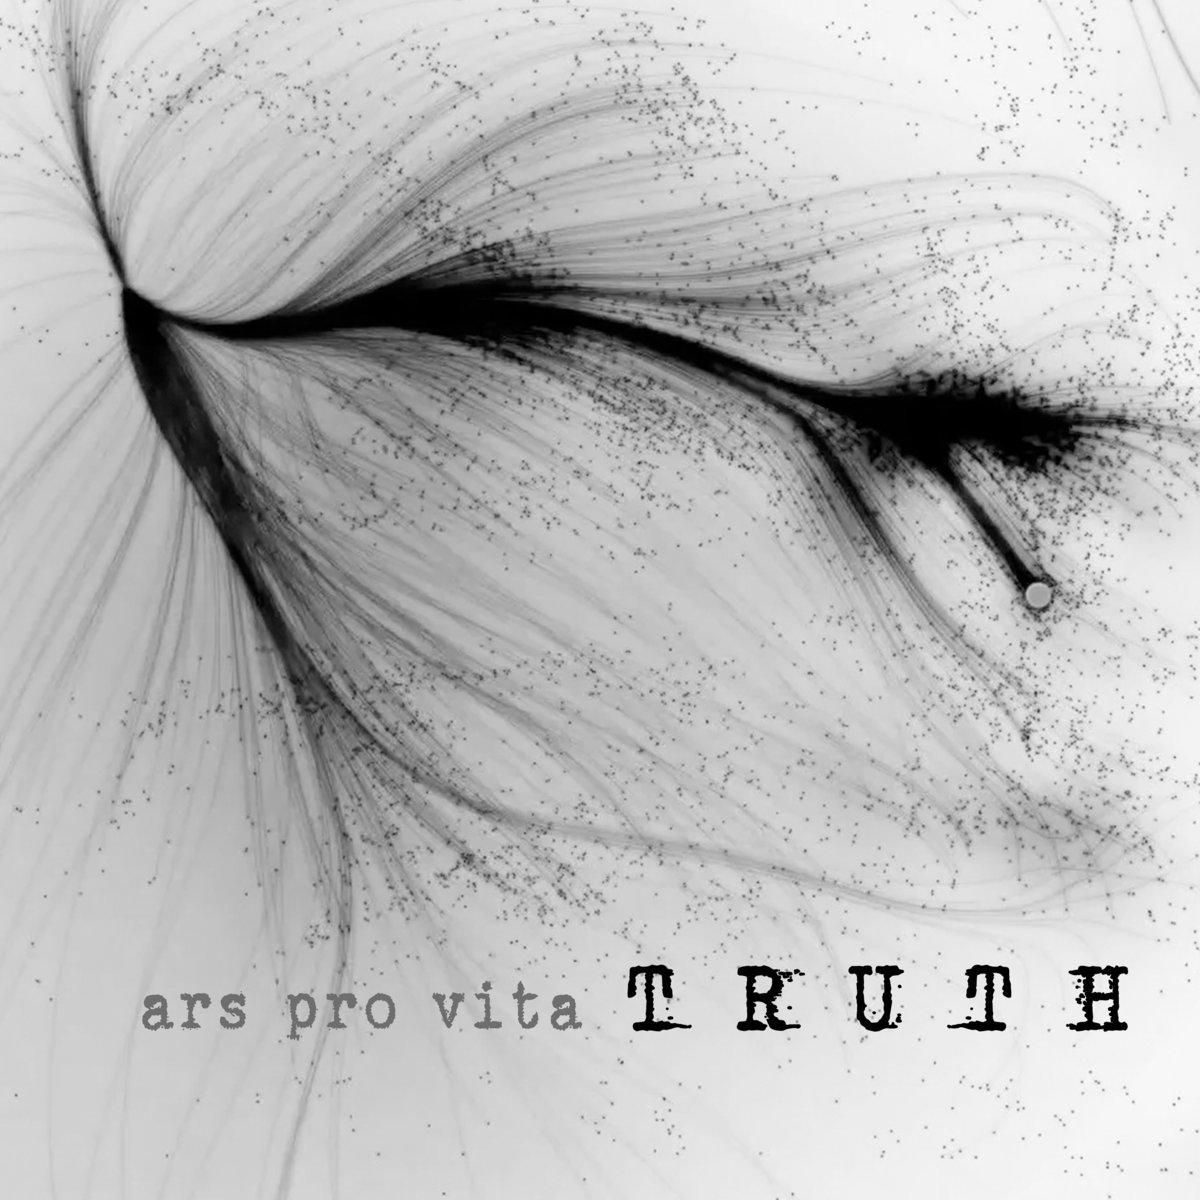 Ars Pro Vita - Truth (2022) destacado album progjazz caratula cover portada